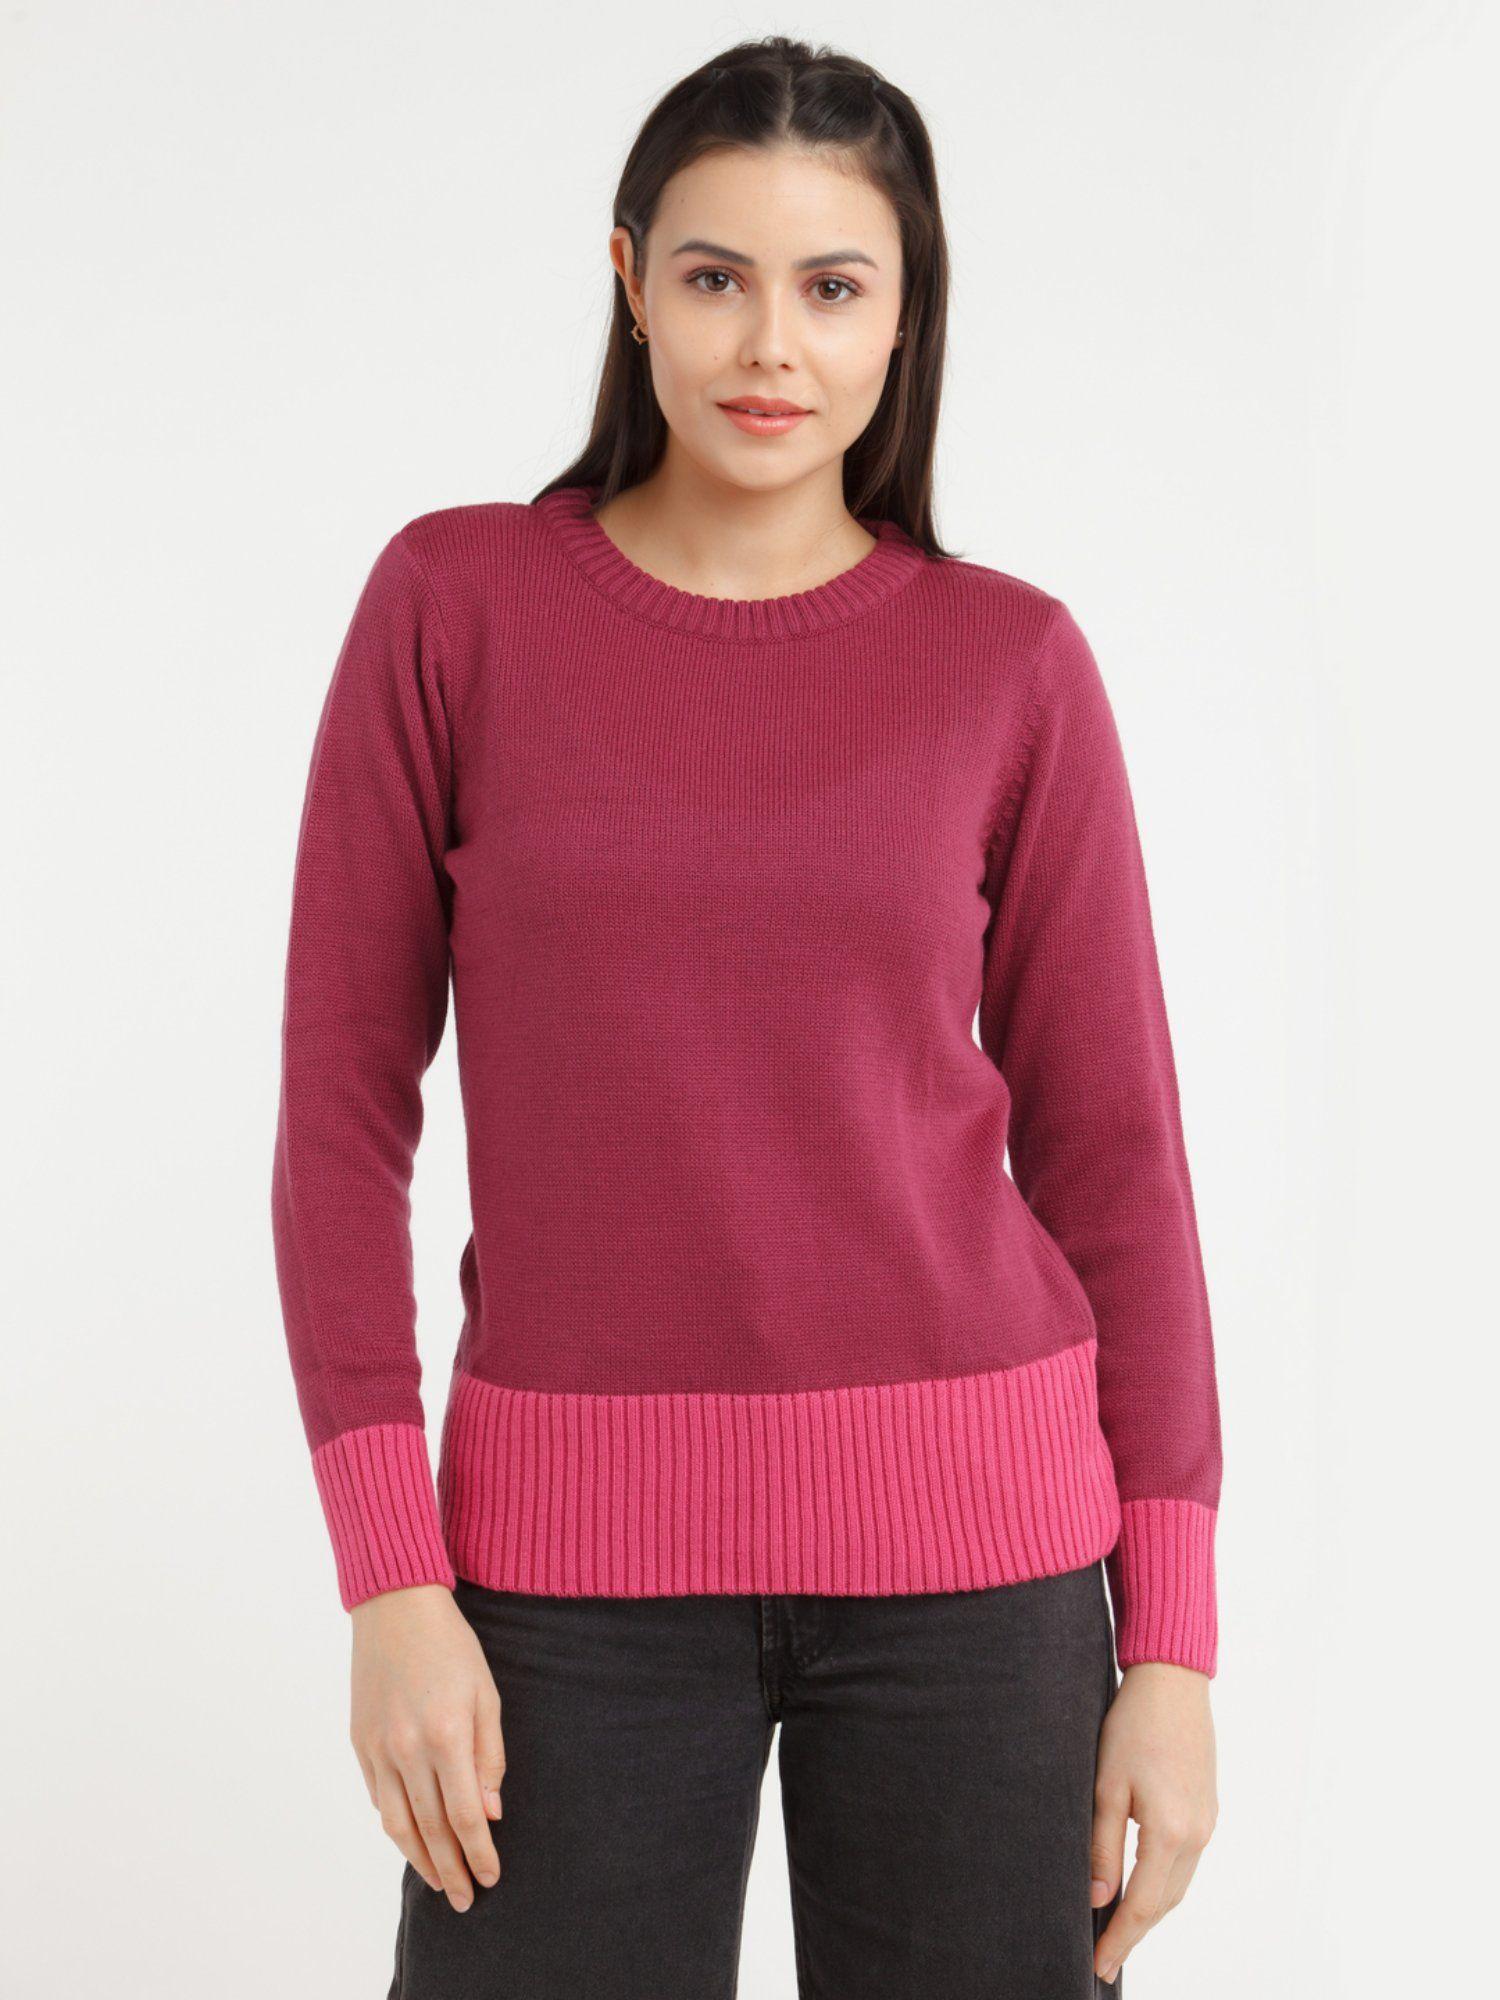 womens-purple-colorblock-sweater